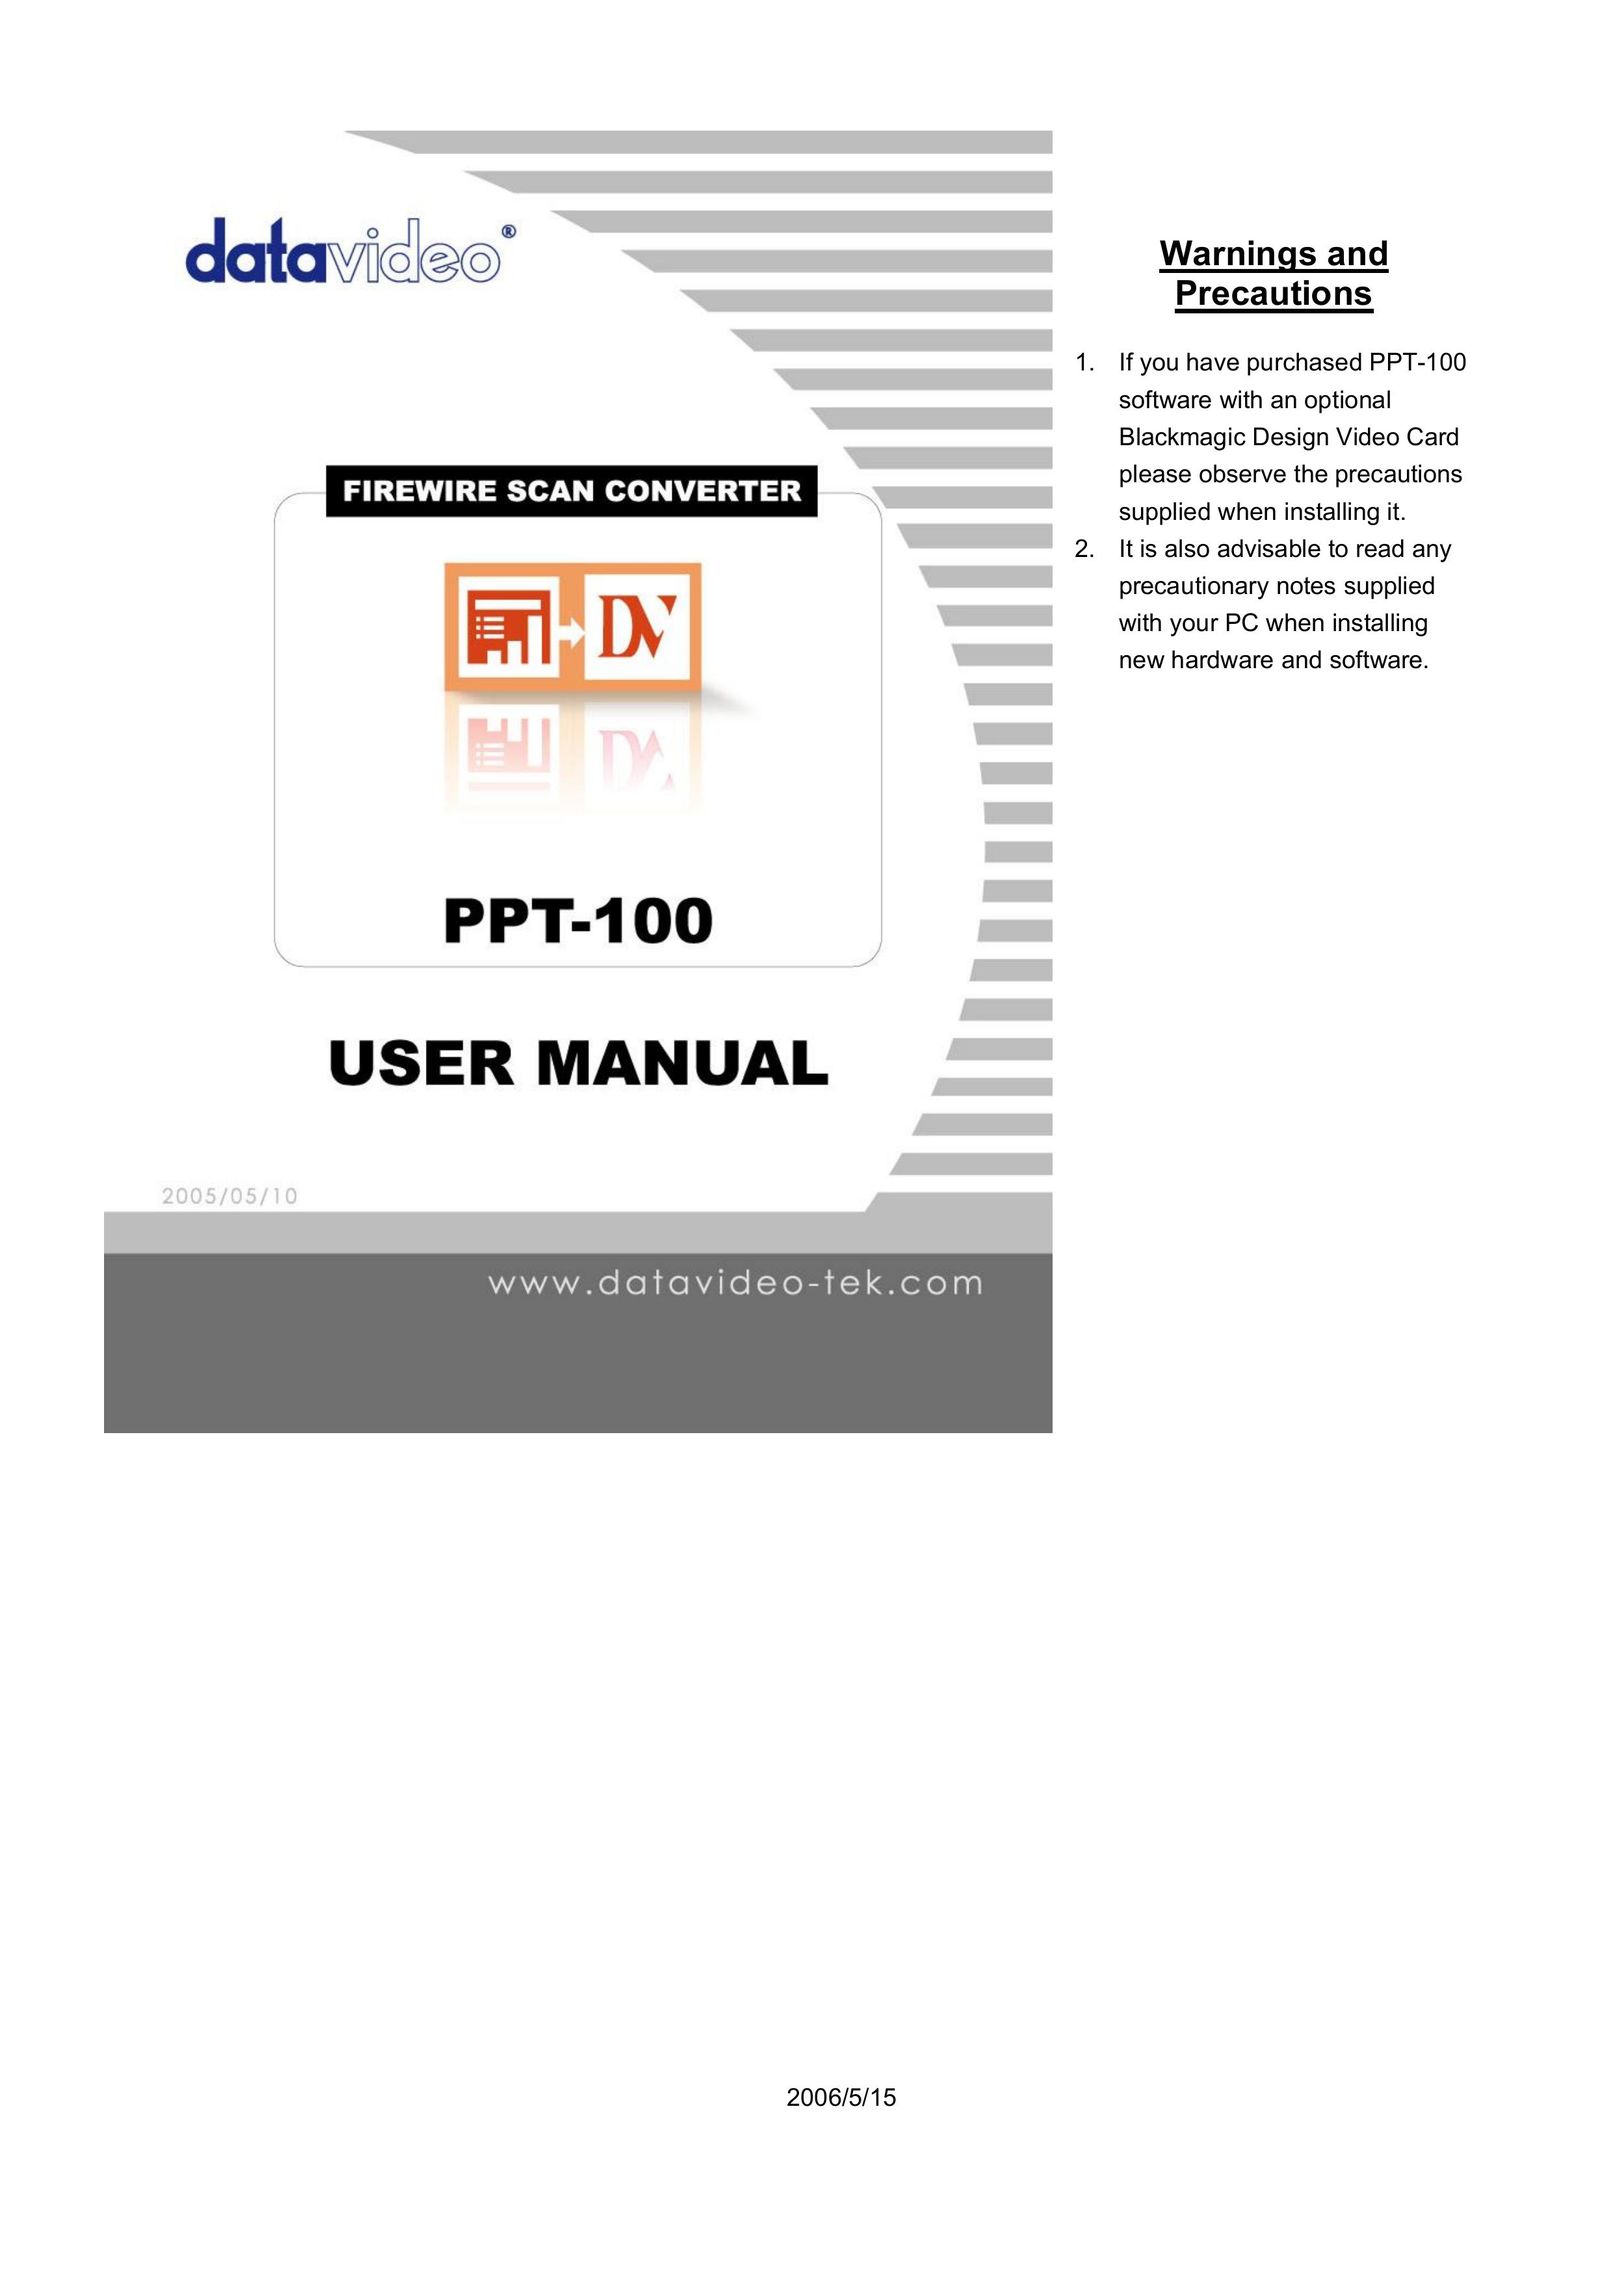 Datavideo PPT-100 Network Card User Manual